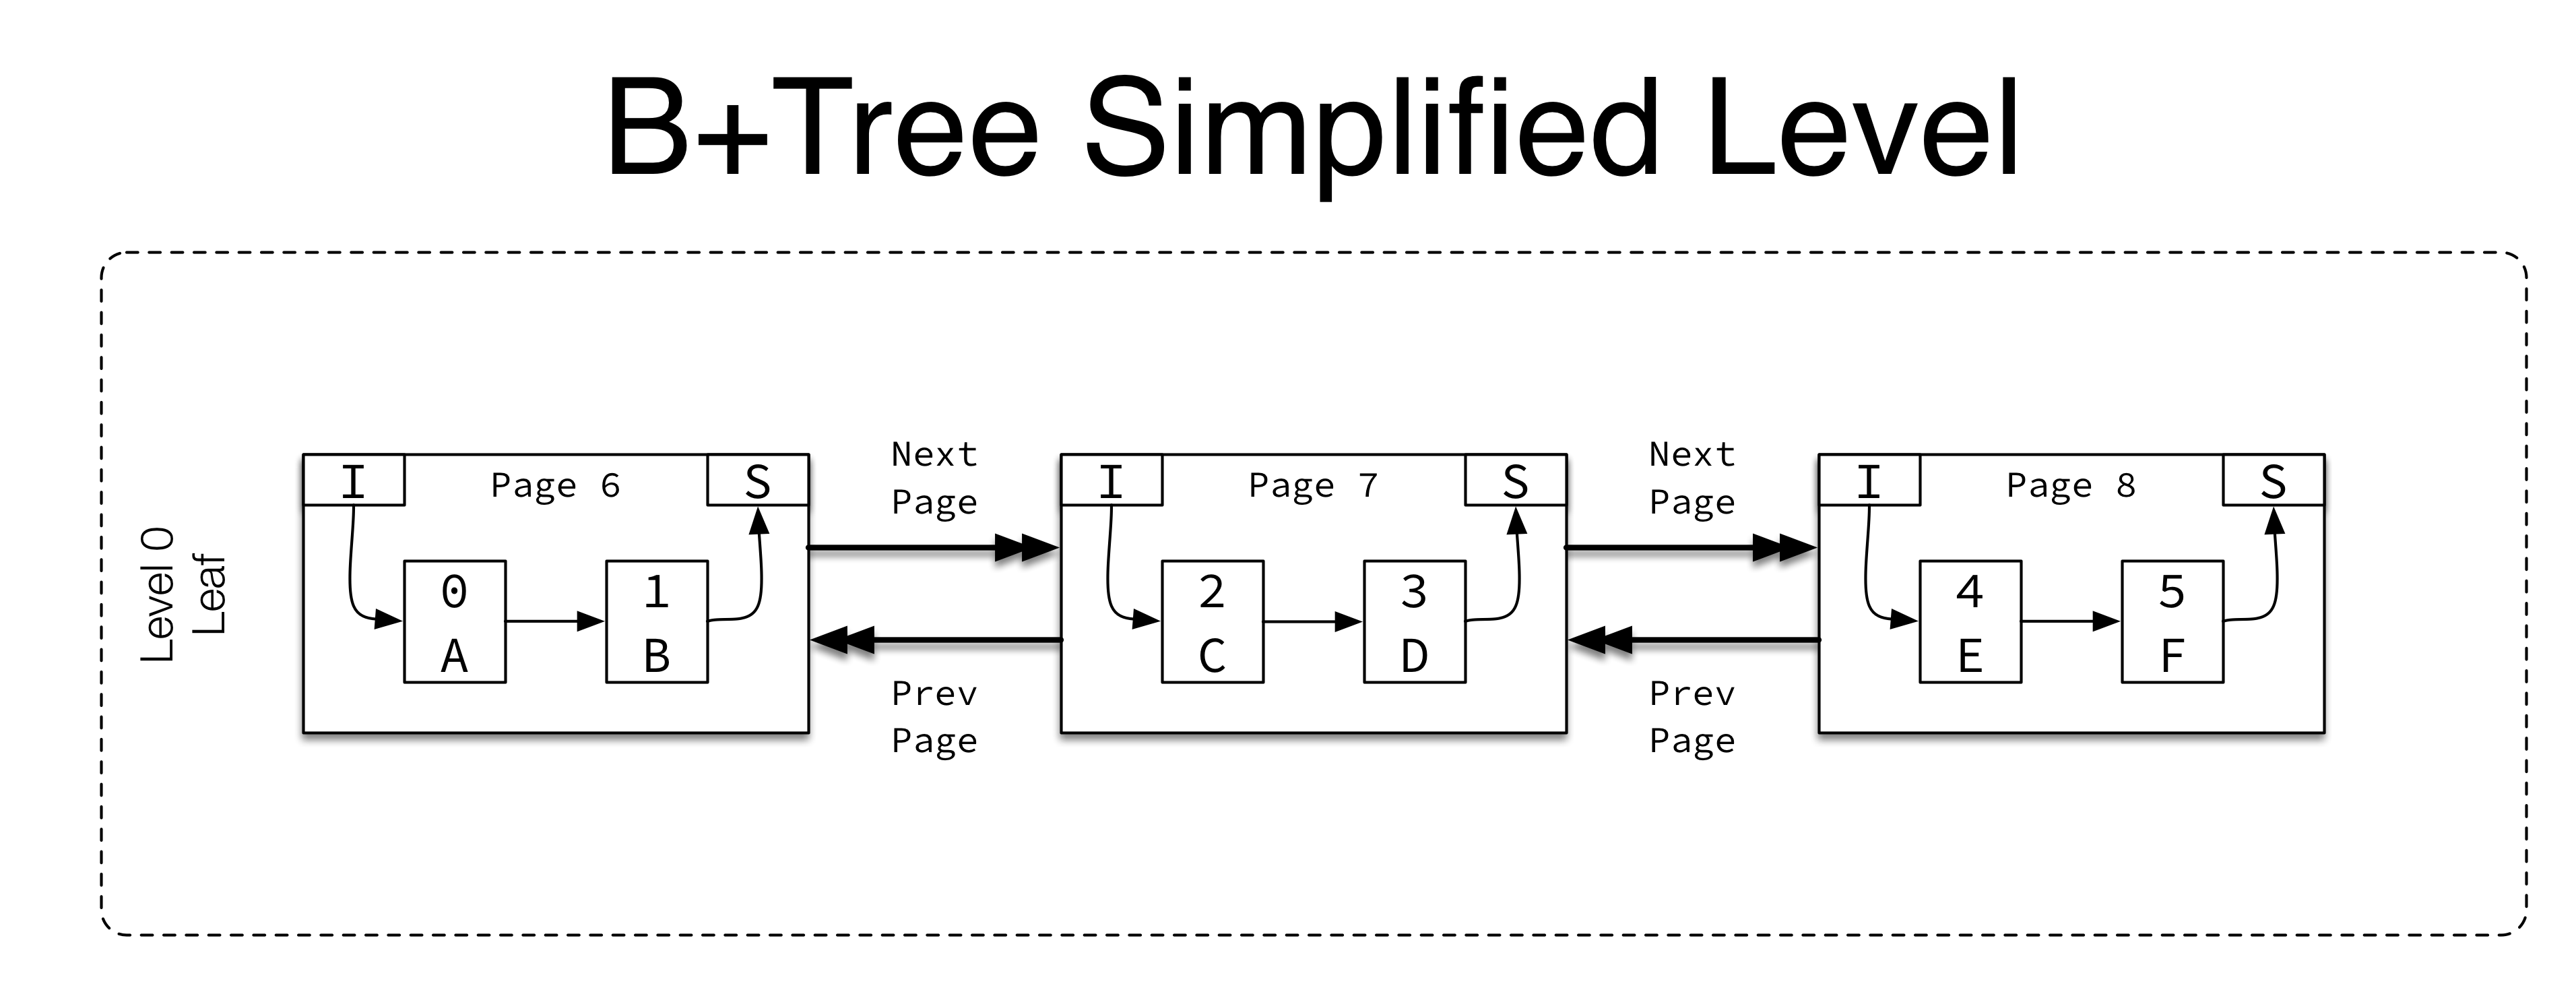 B+Tree Simplified Level